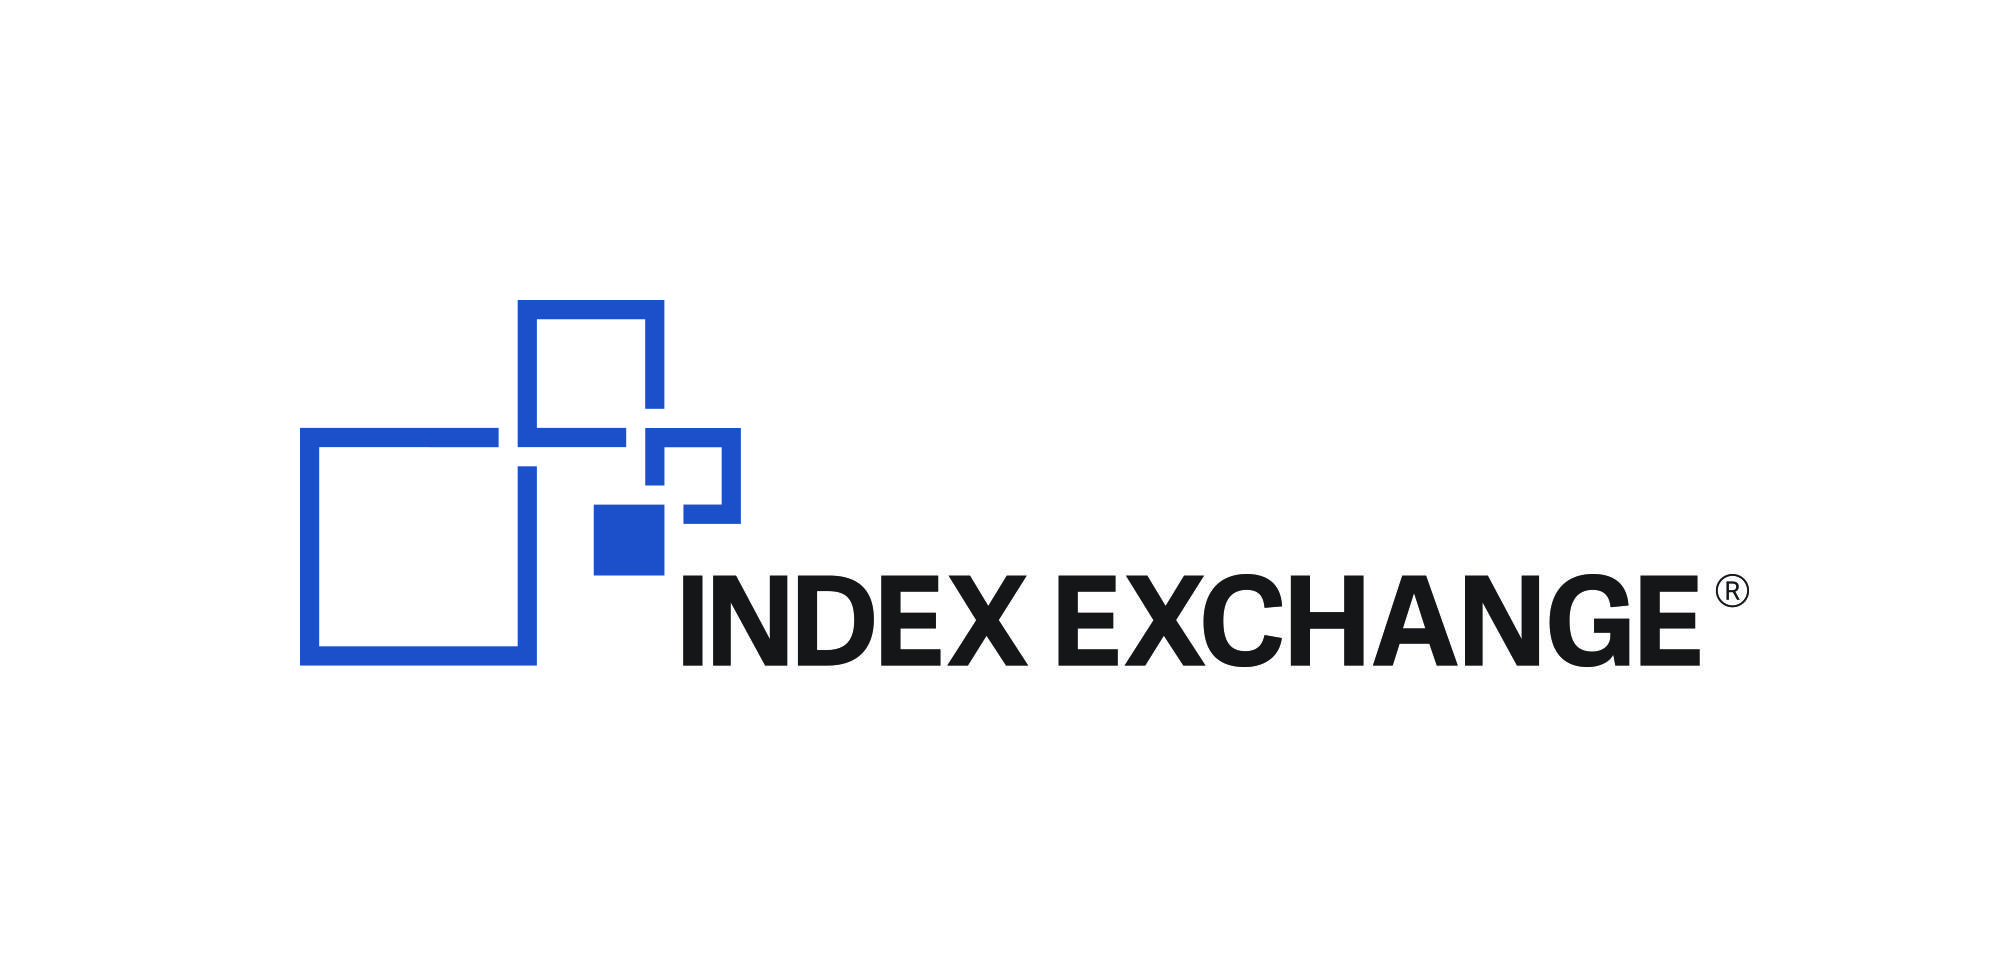 Exchange Logo - Brand Resources - Index Exchange